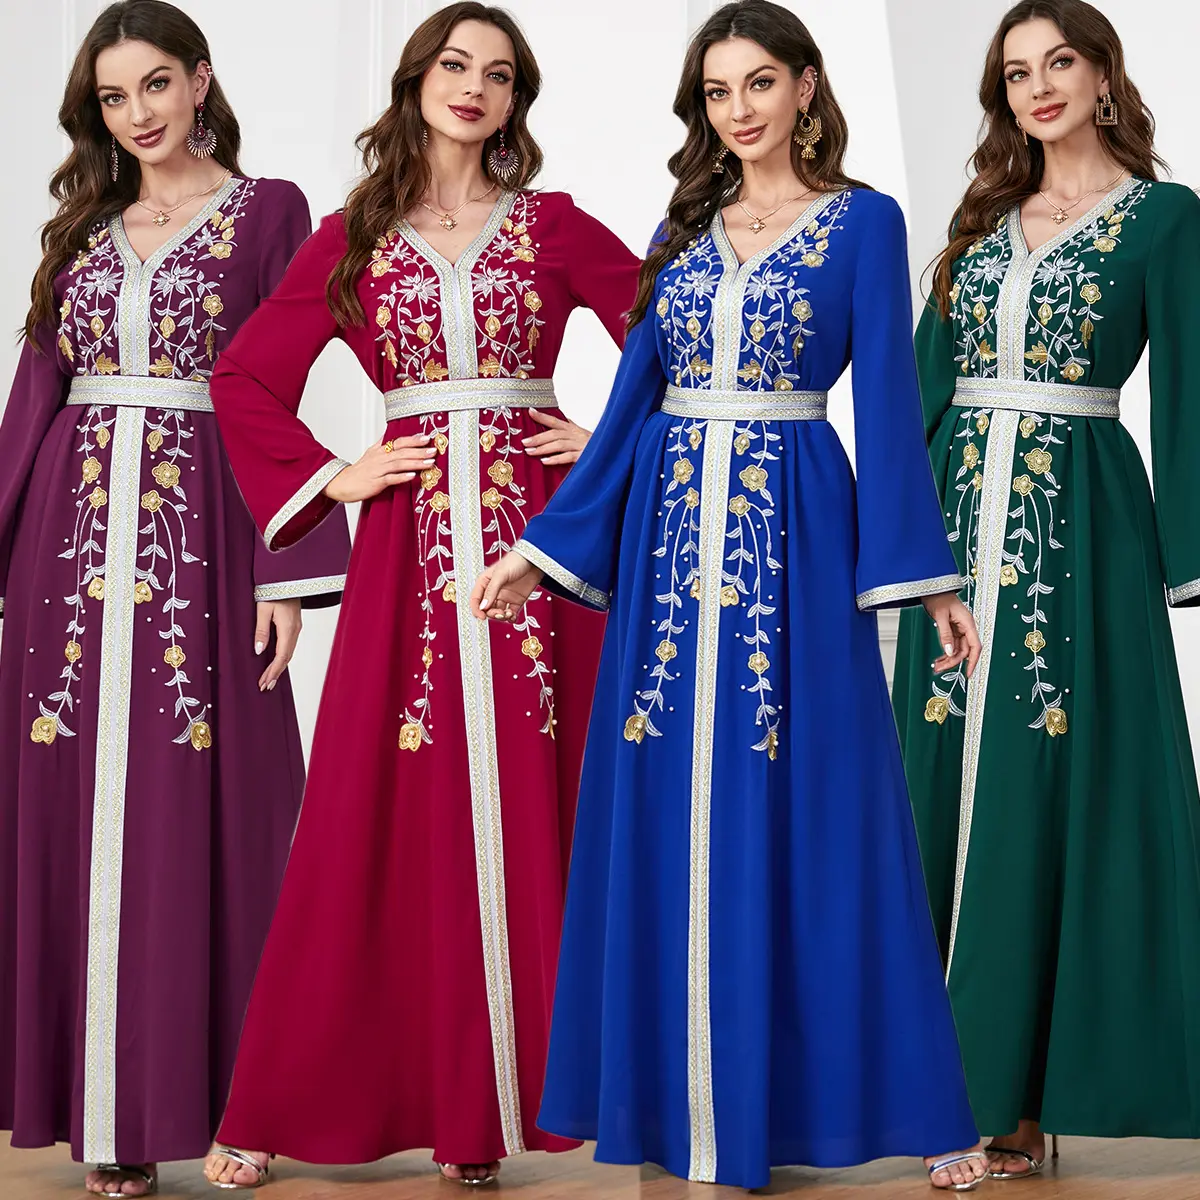 1557 Dubia Abaya Maxi Kaftan Kaftan Femme bestickte Langarm marok kanis chen Kaftan Großhandel bescheidene Kleidung für Frauen